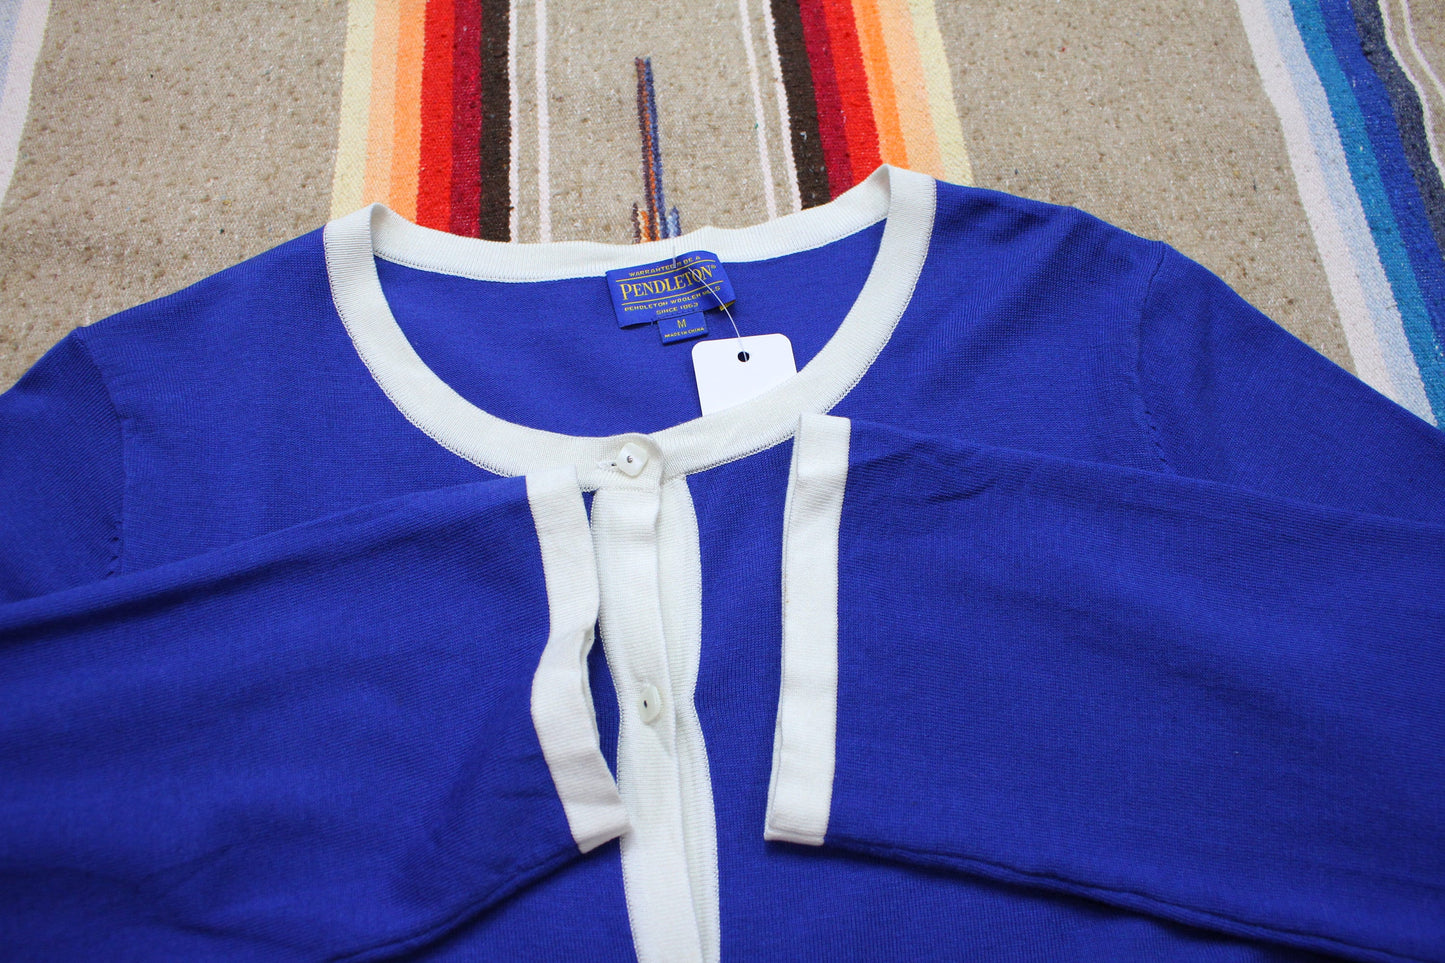 2010s Pendleton Silk Blend Button Up Sweater Womens Size L/XL